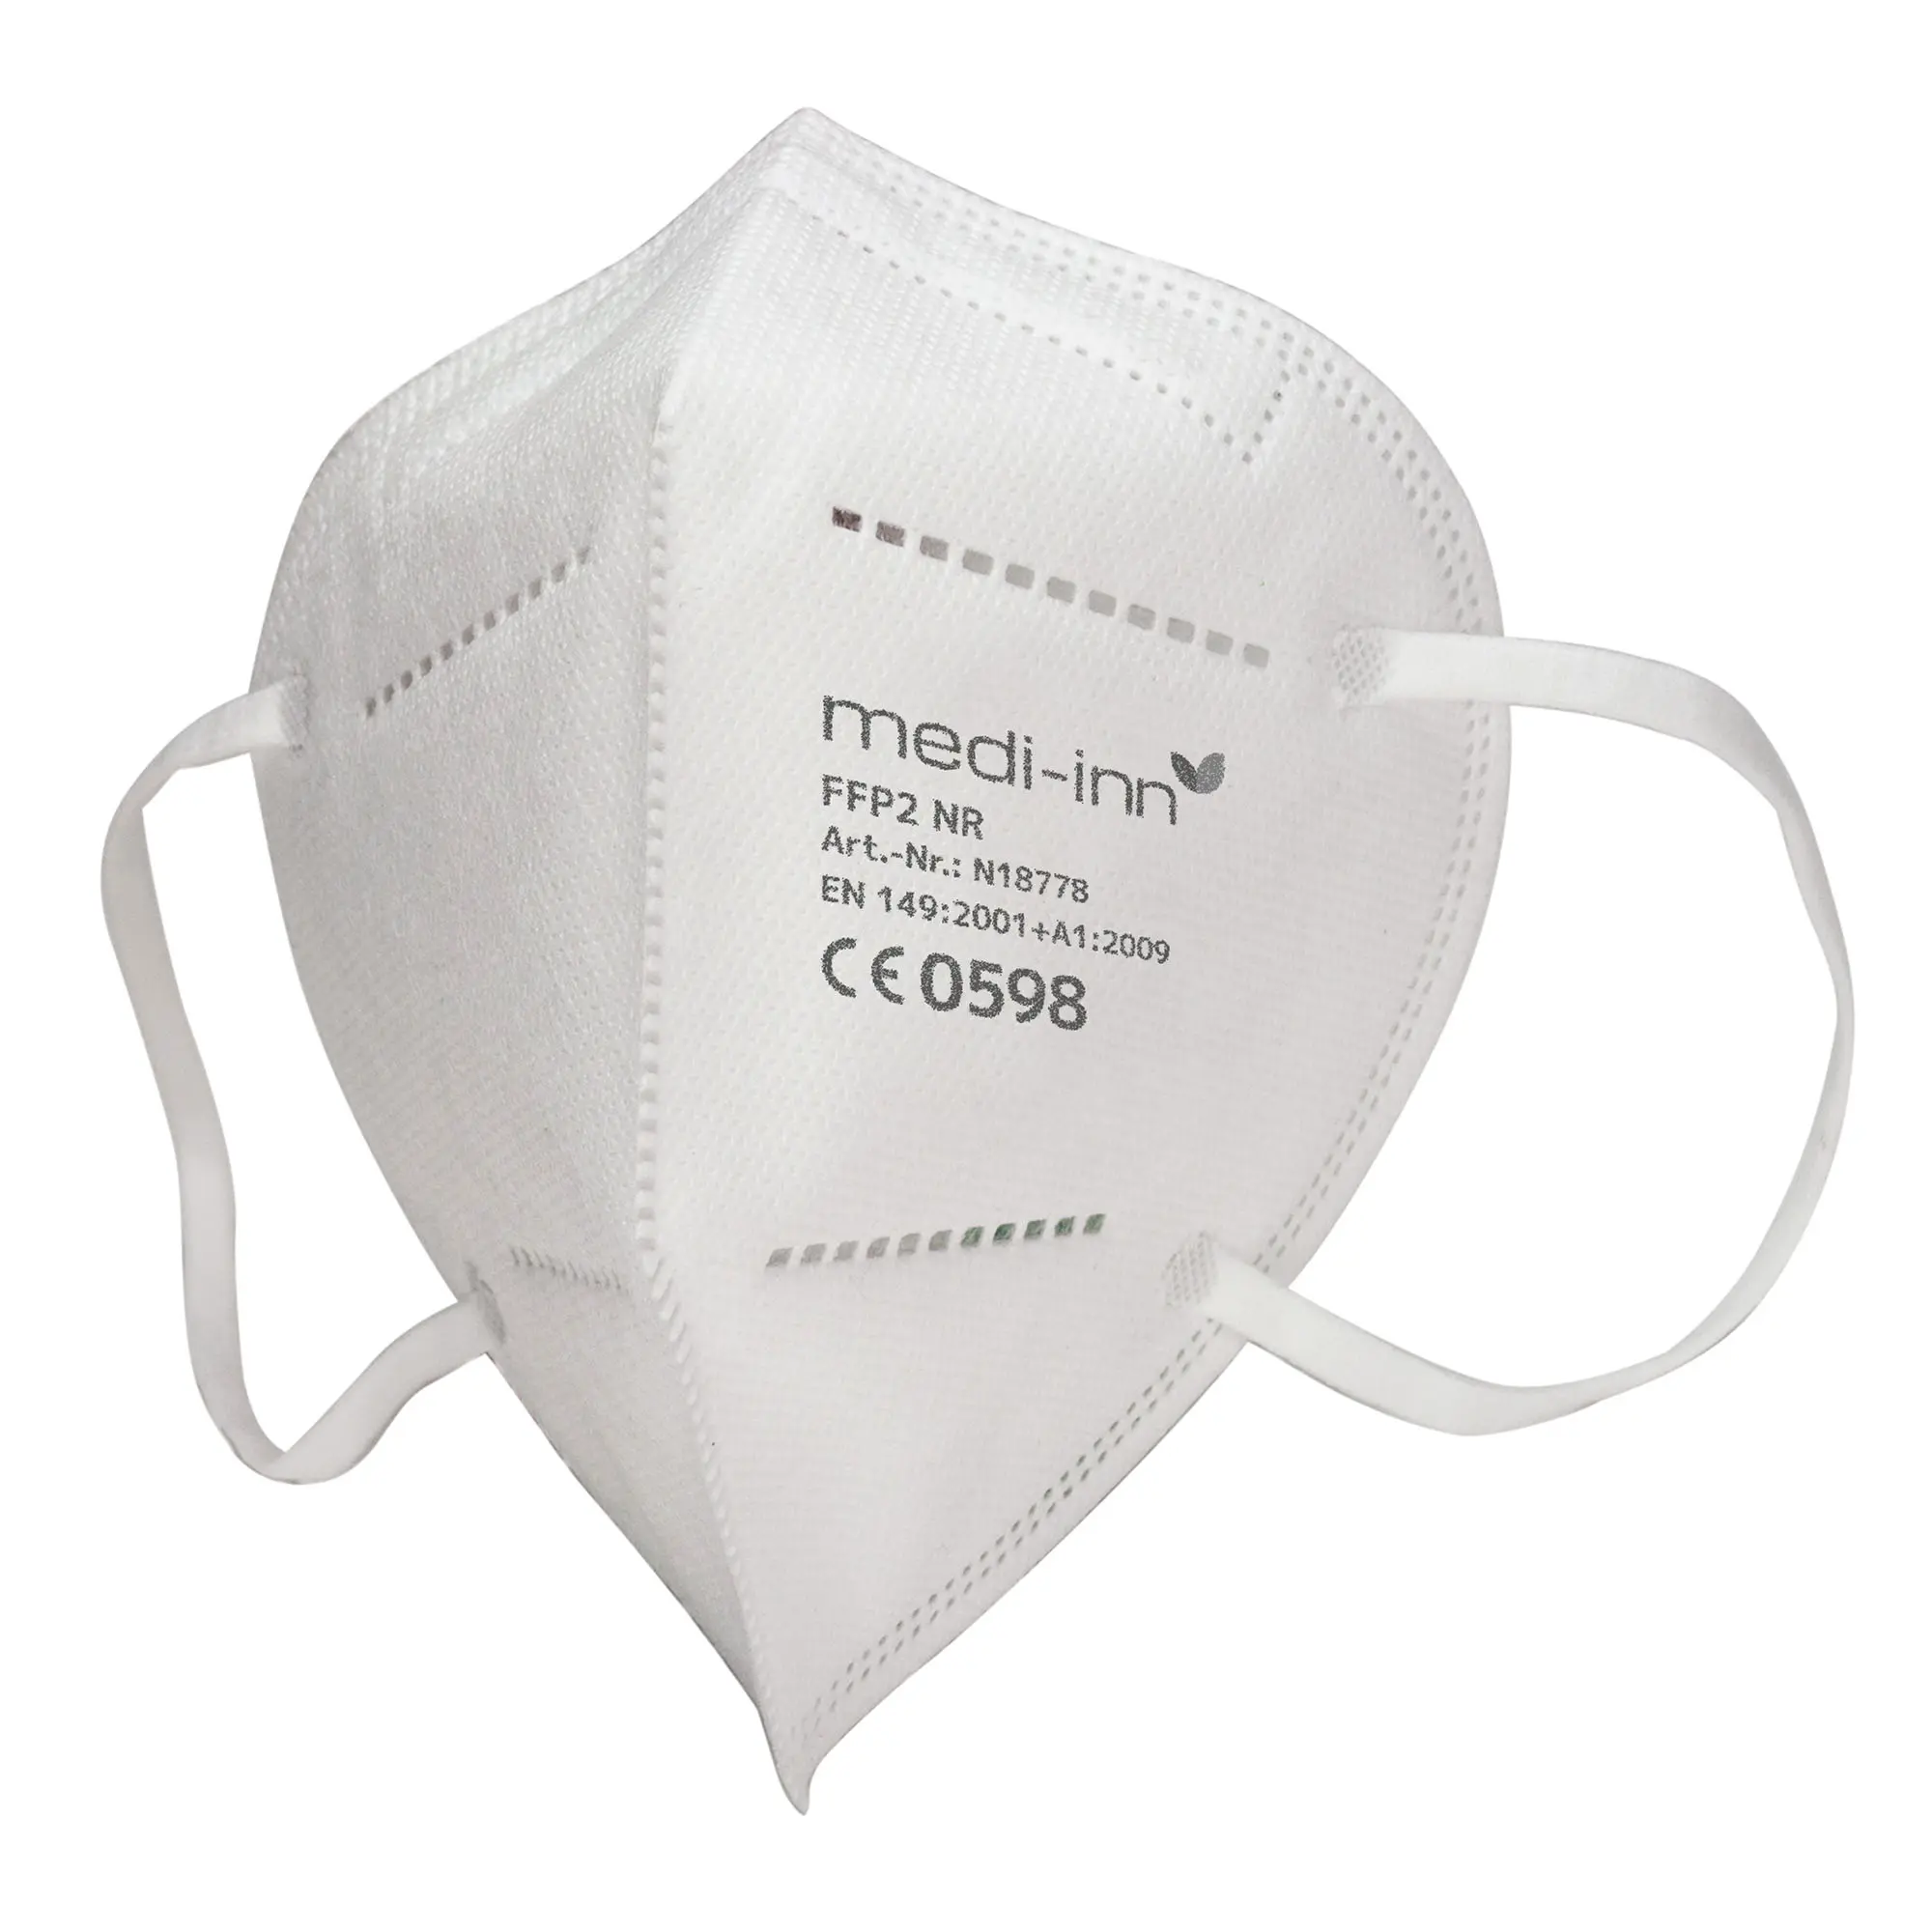 Medi-Inn FFP2 NR Atemschutzmasken ohne Ventil, 4-lagig, CE-Nummer: 0589, weiß